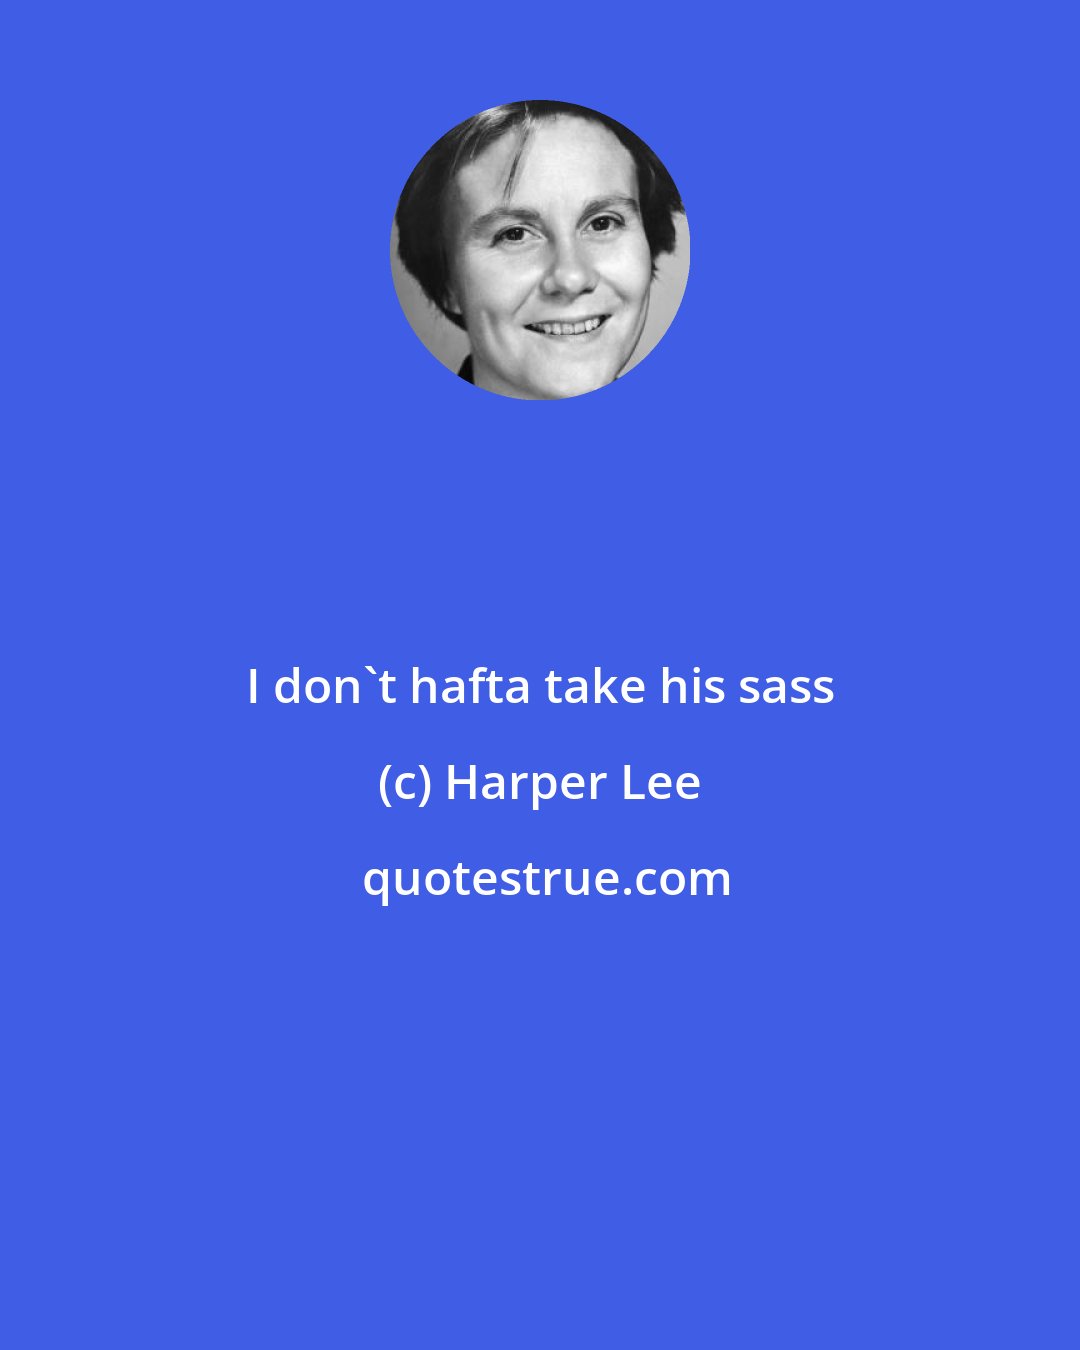 Harper Lee: I don't hafta take his sass